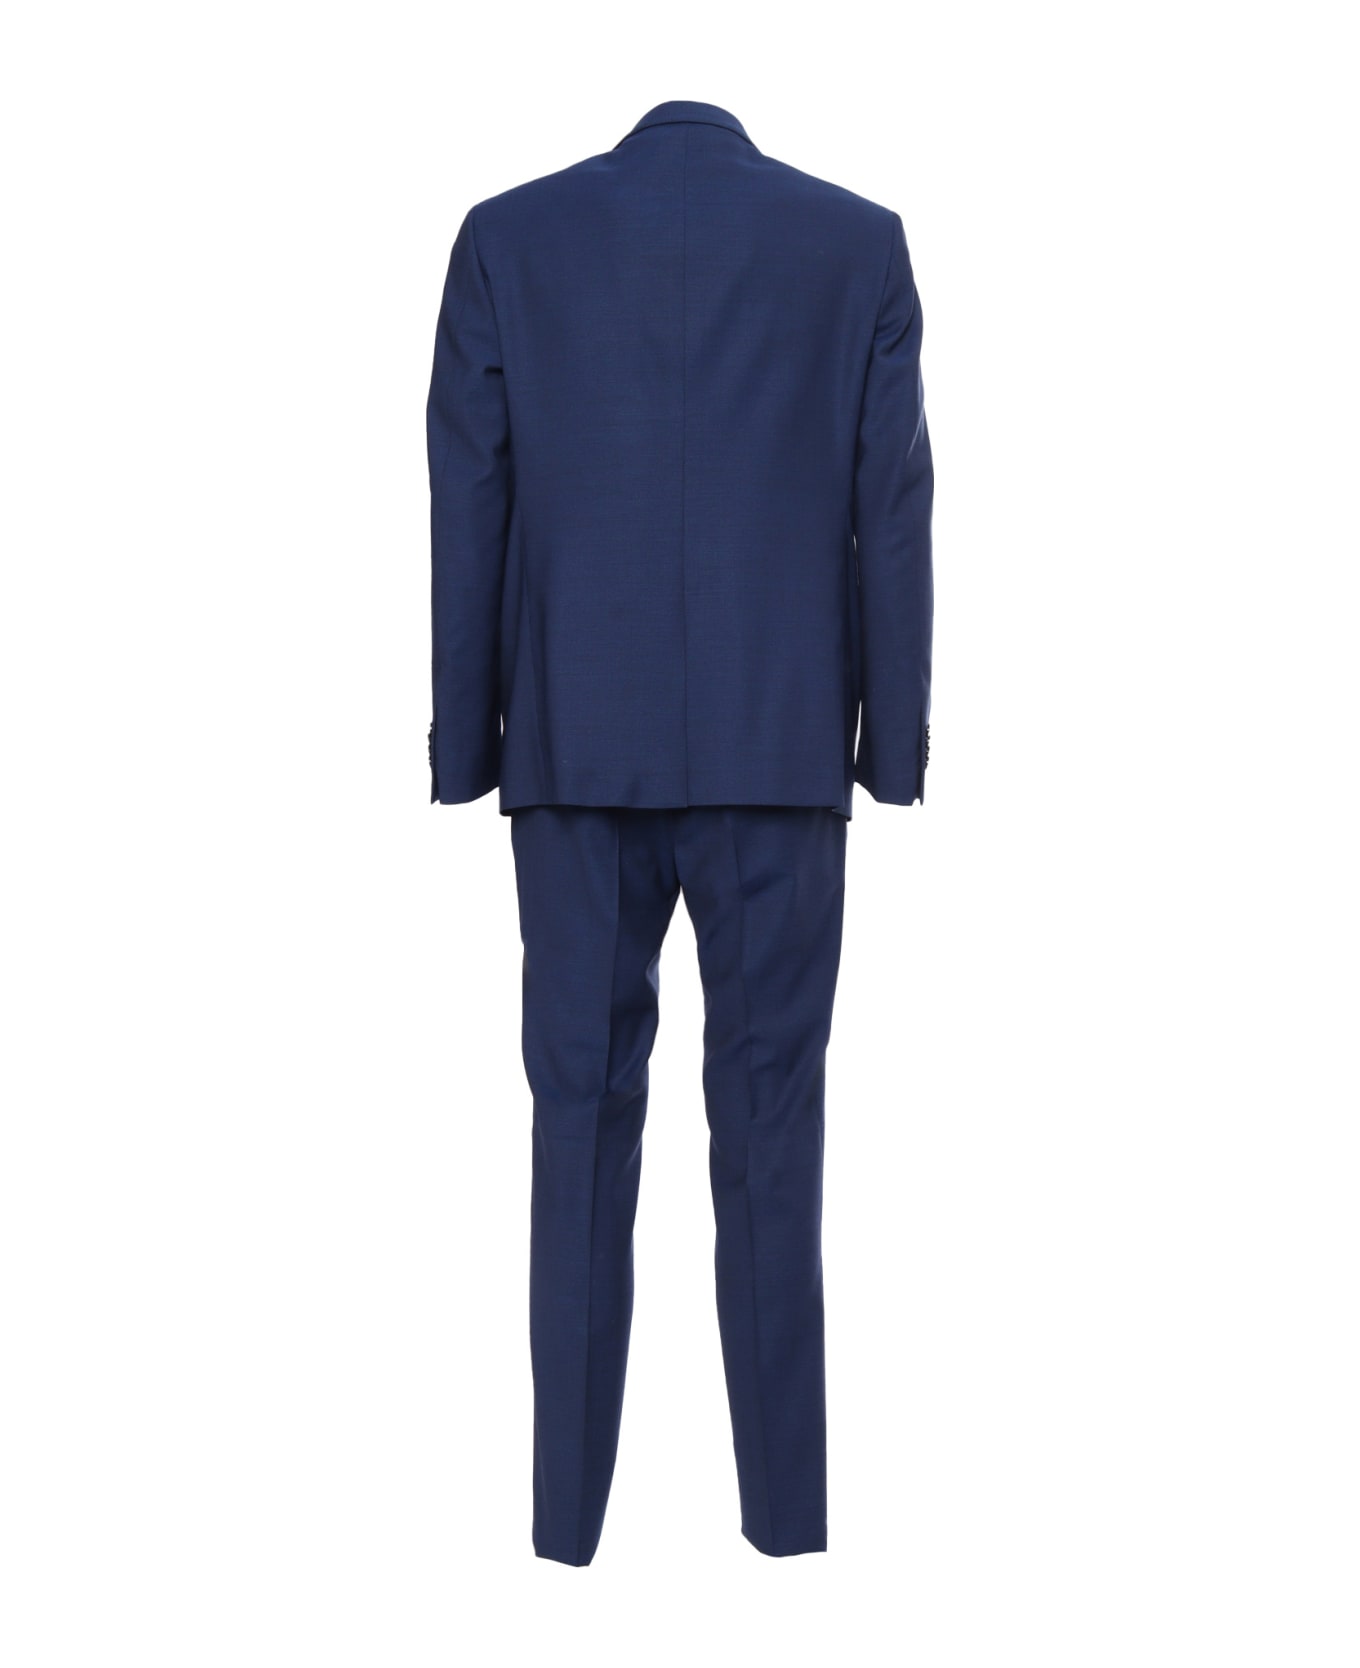 Luigi Bianchi Mantova Bright Blue Suit - BLUE